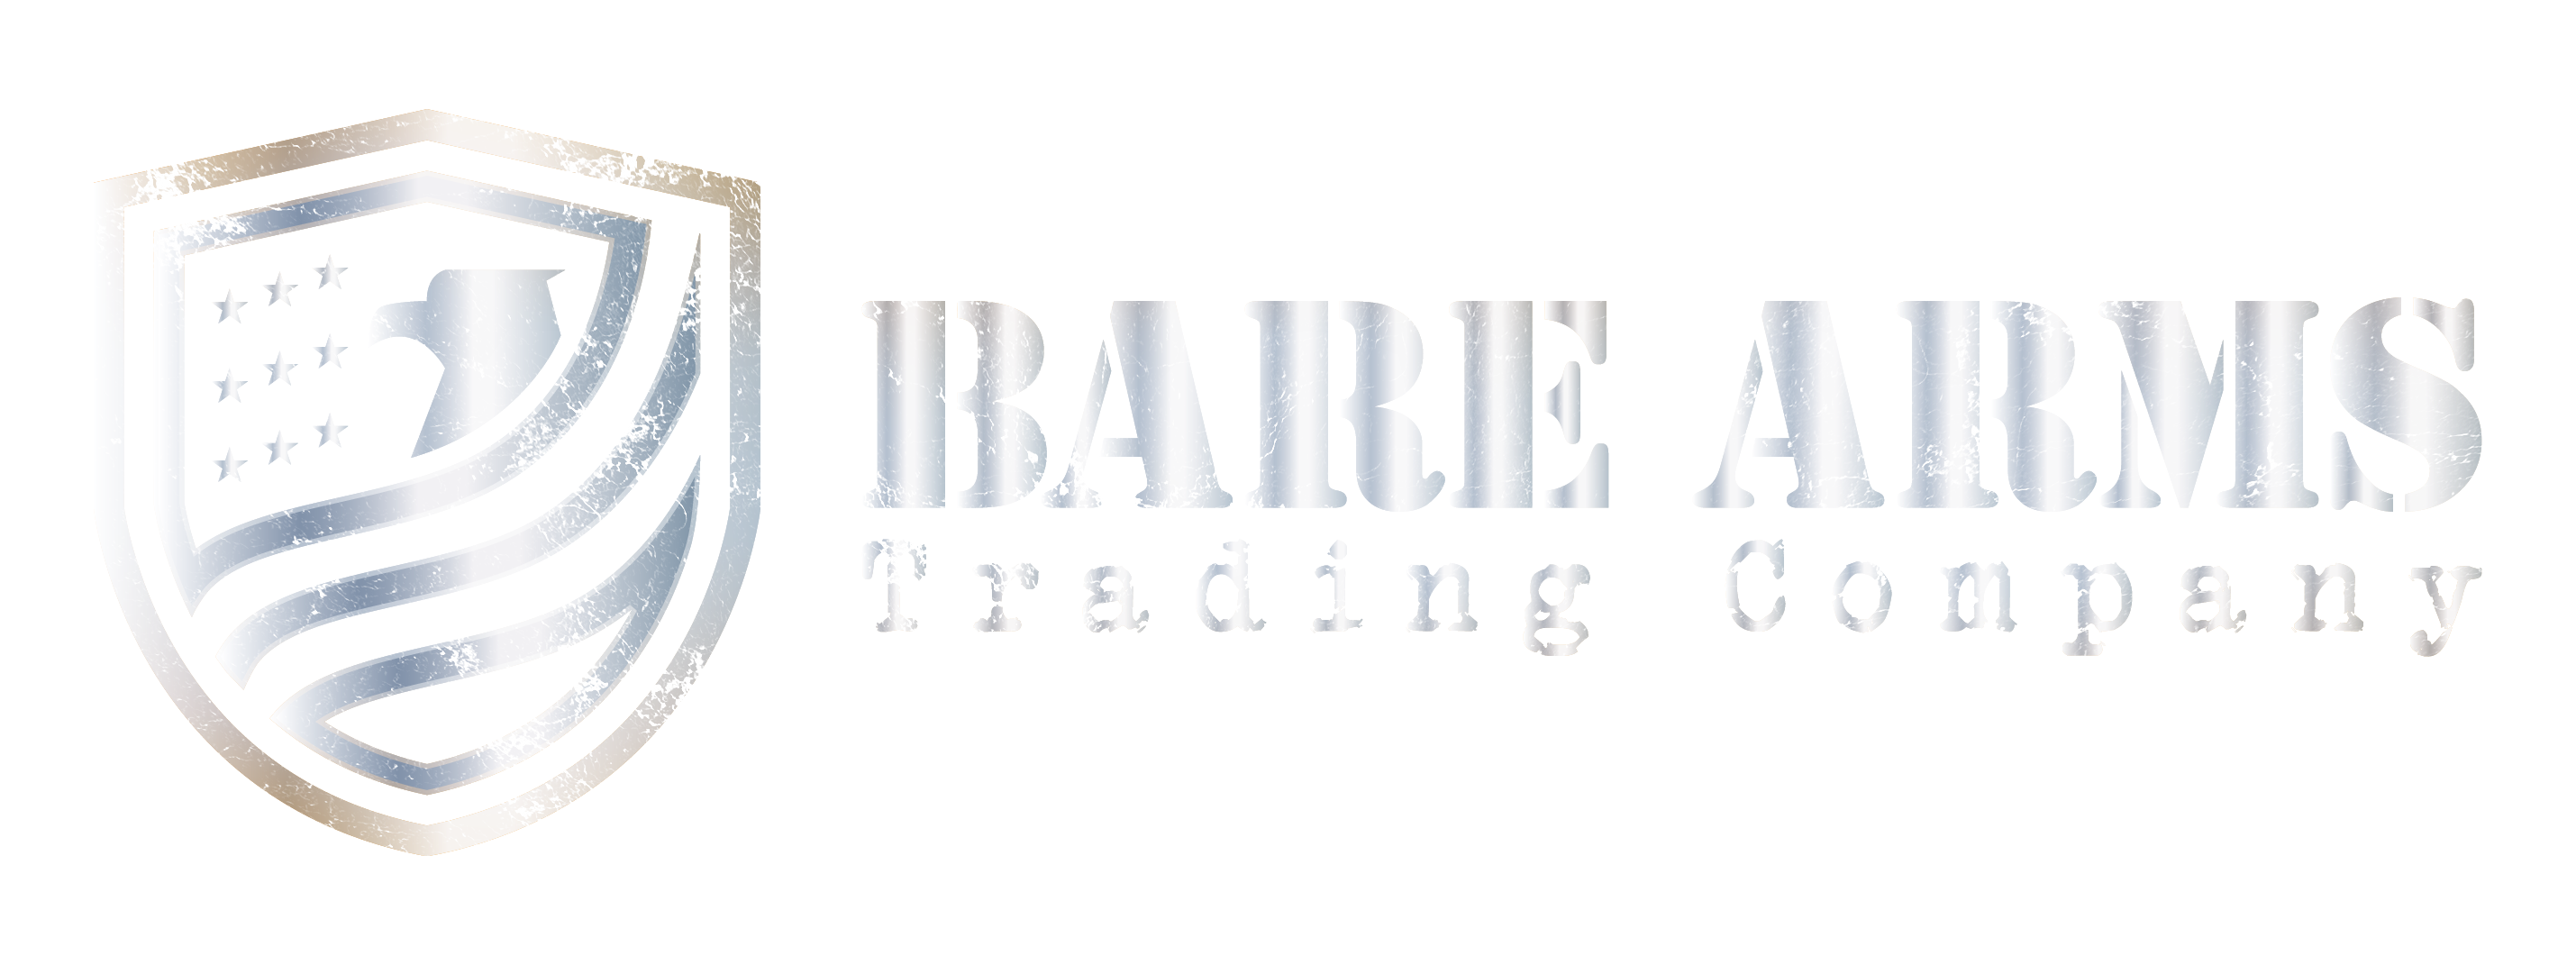 Bare Arms Trading Company